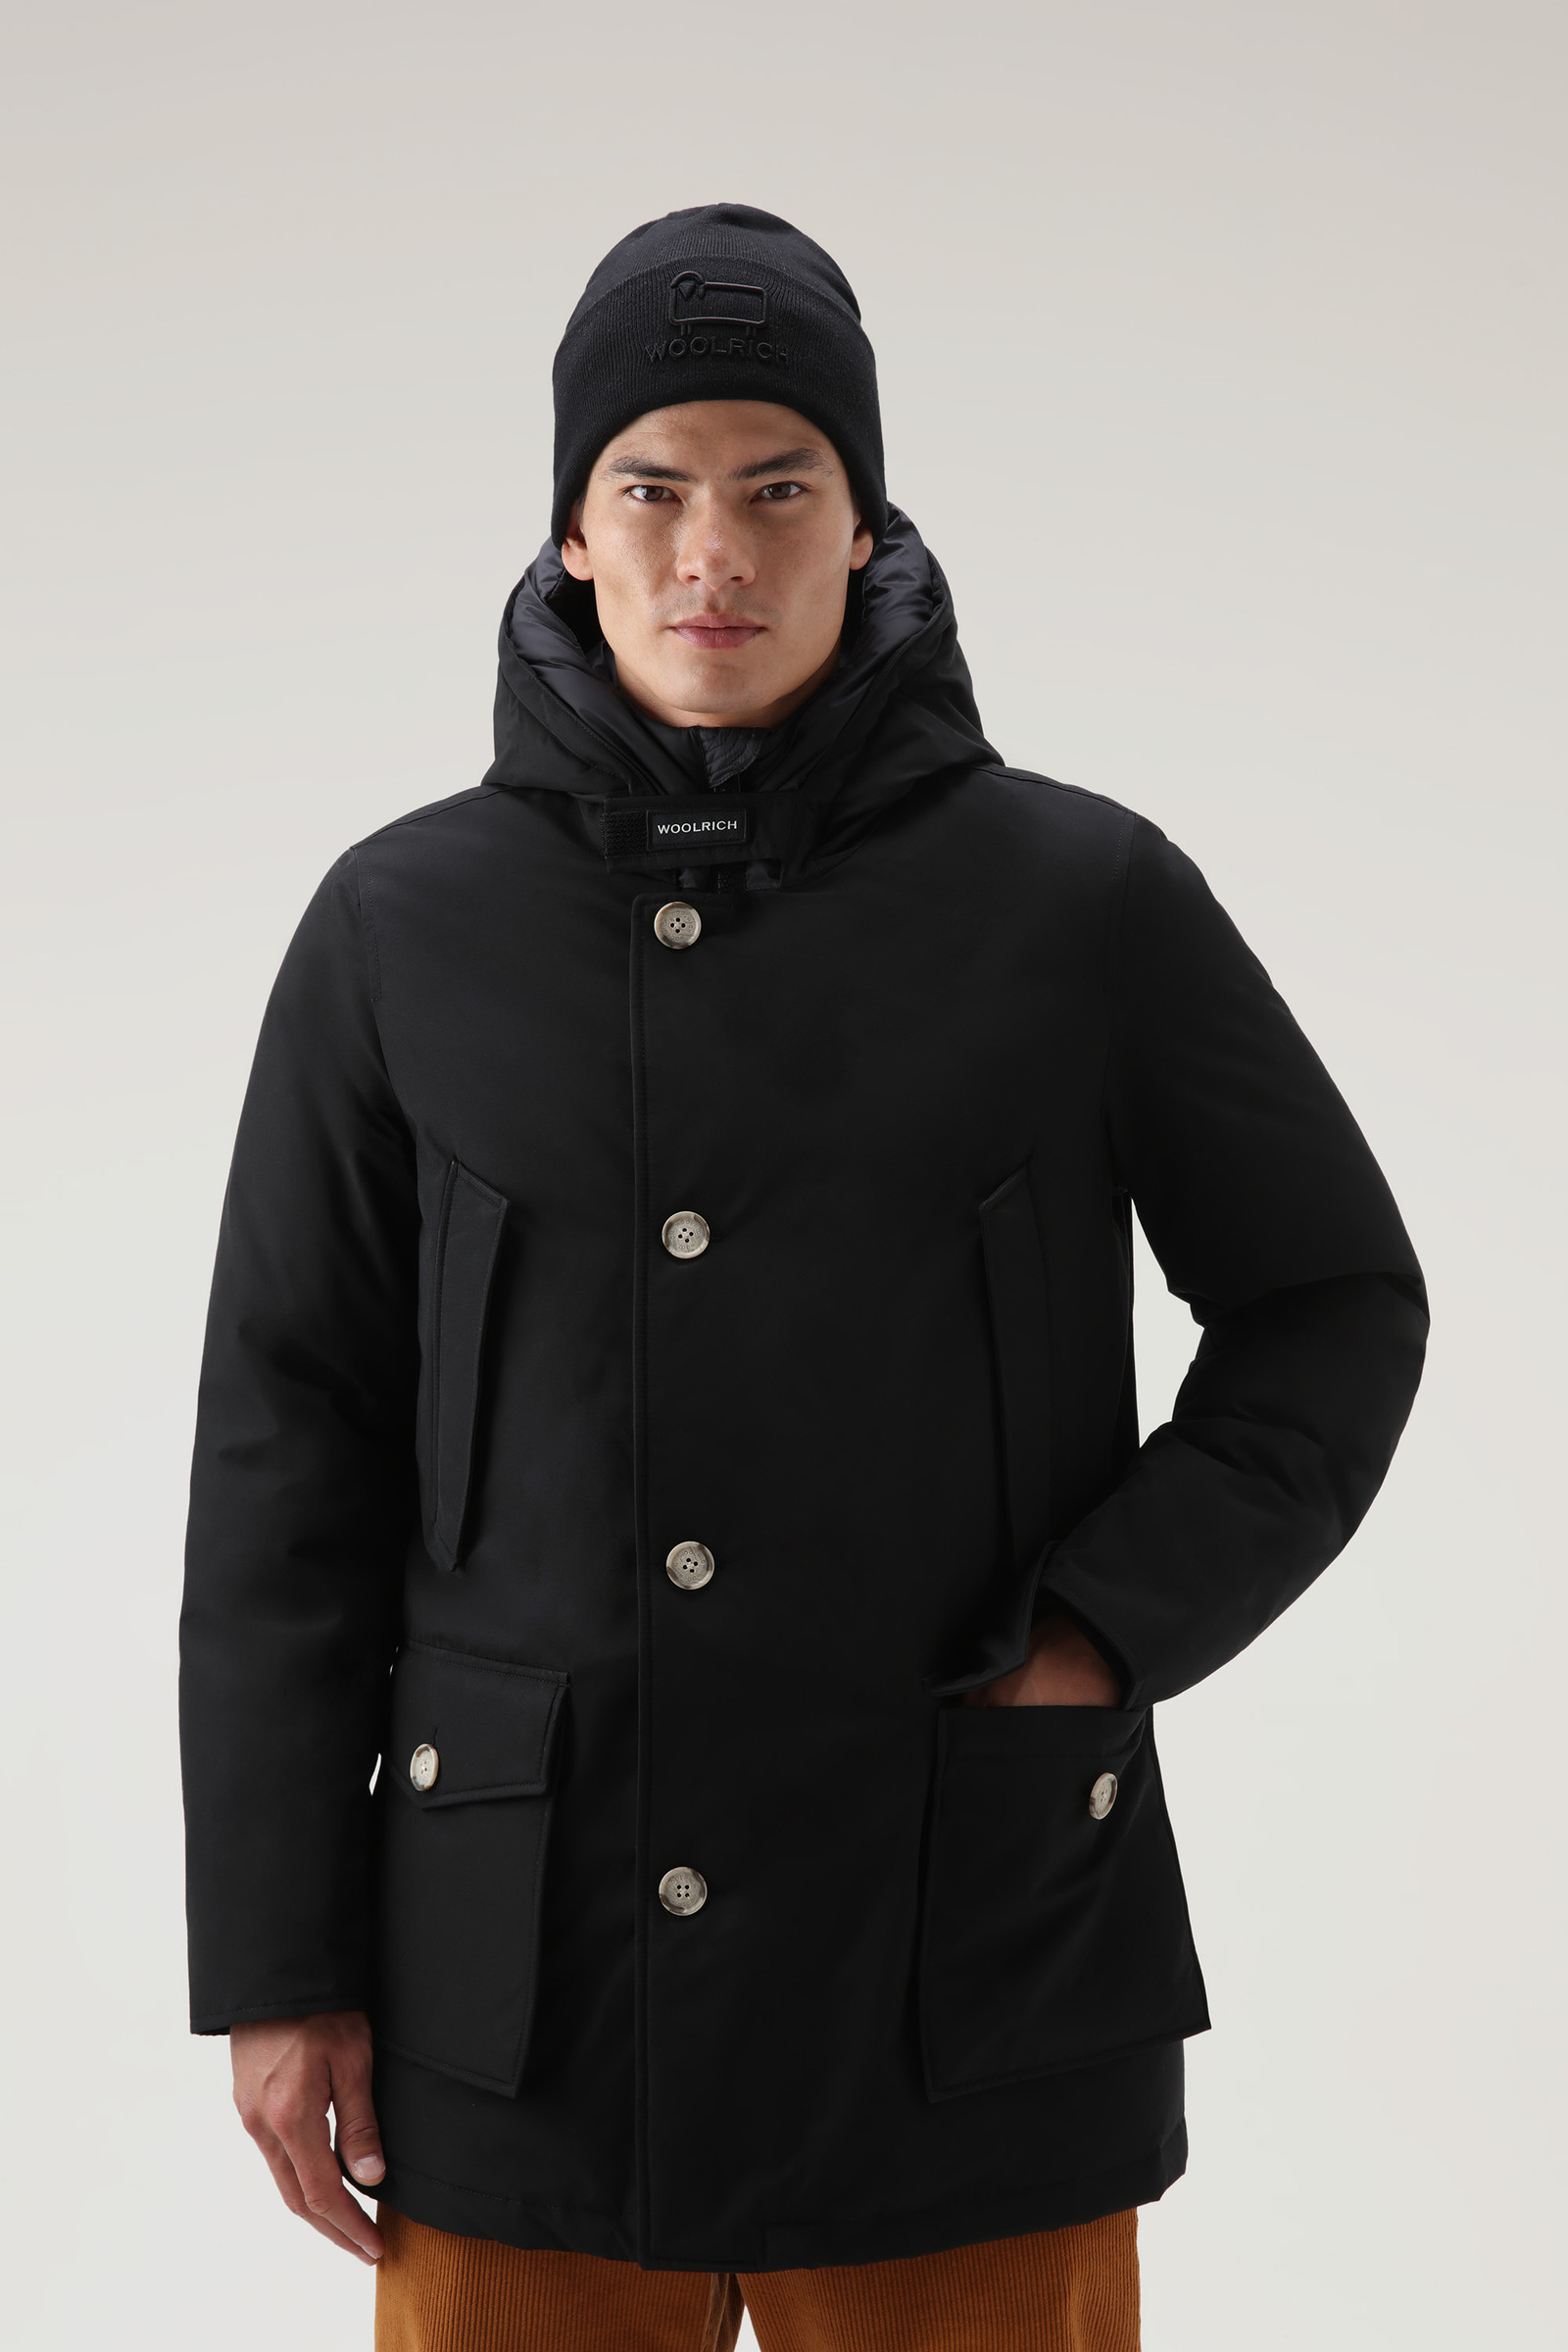 Baron steek Vuiligheid Men's Arctic Parka in Ramar Cloth Black | Woolrich IE